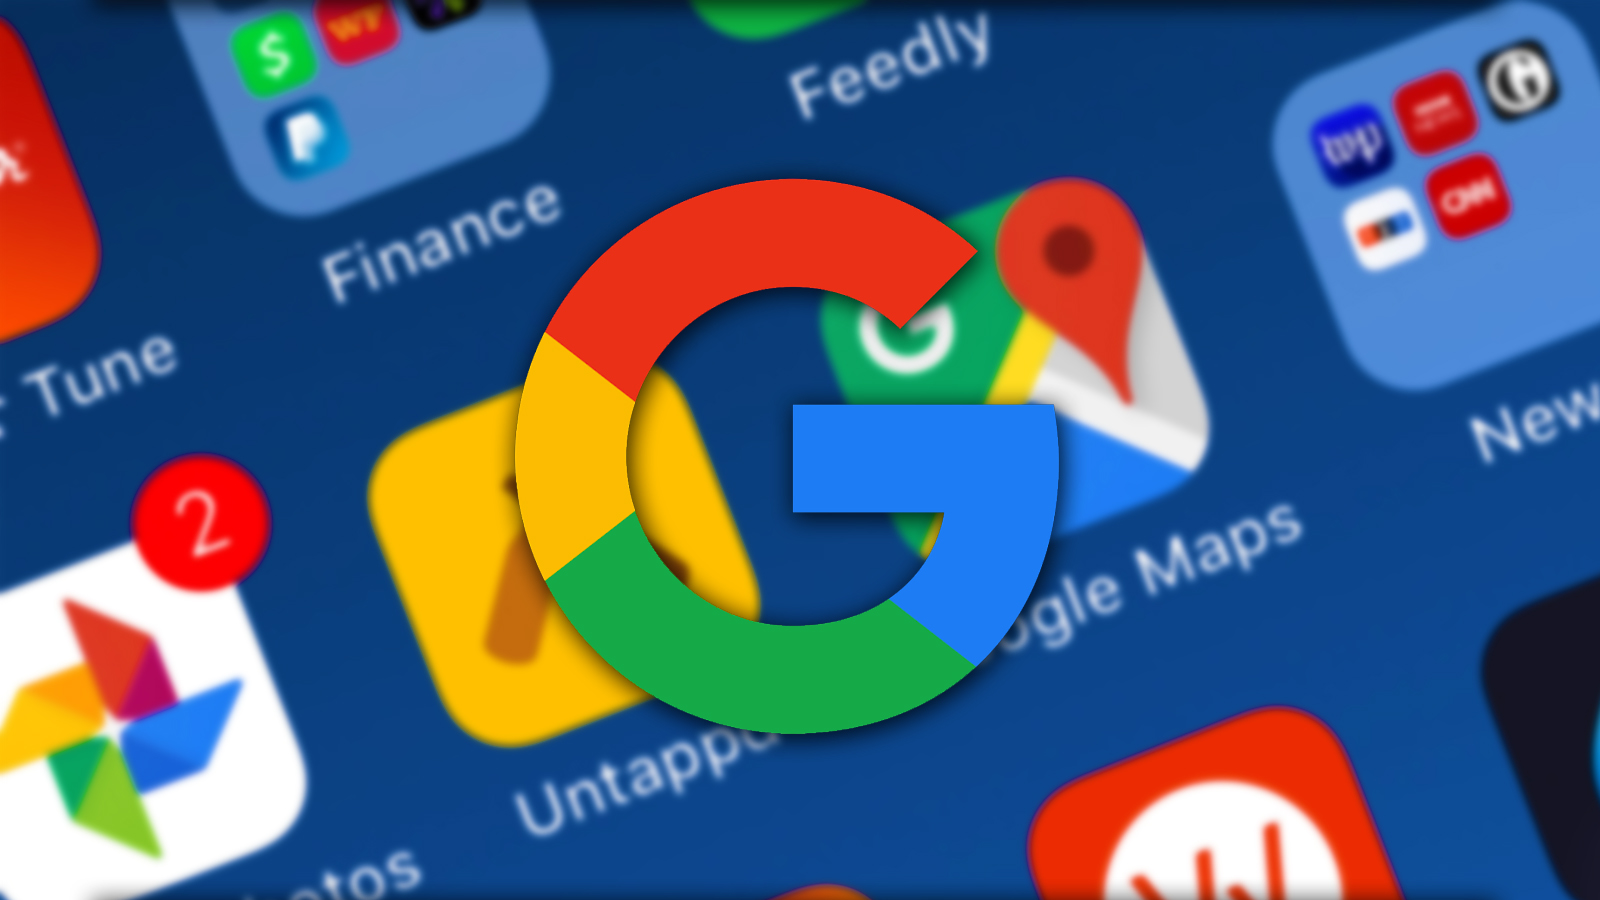 GoogleTalks Shutting Down